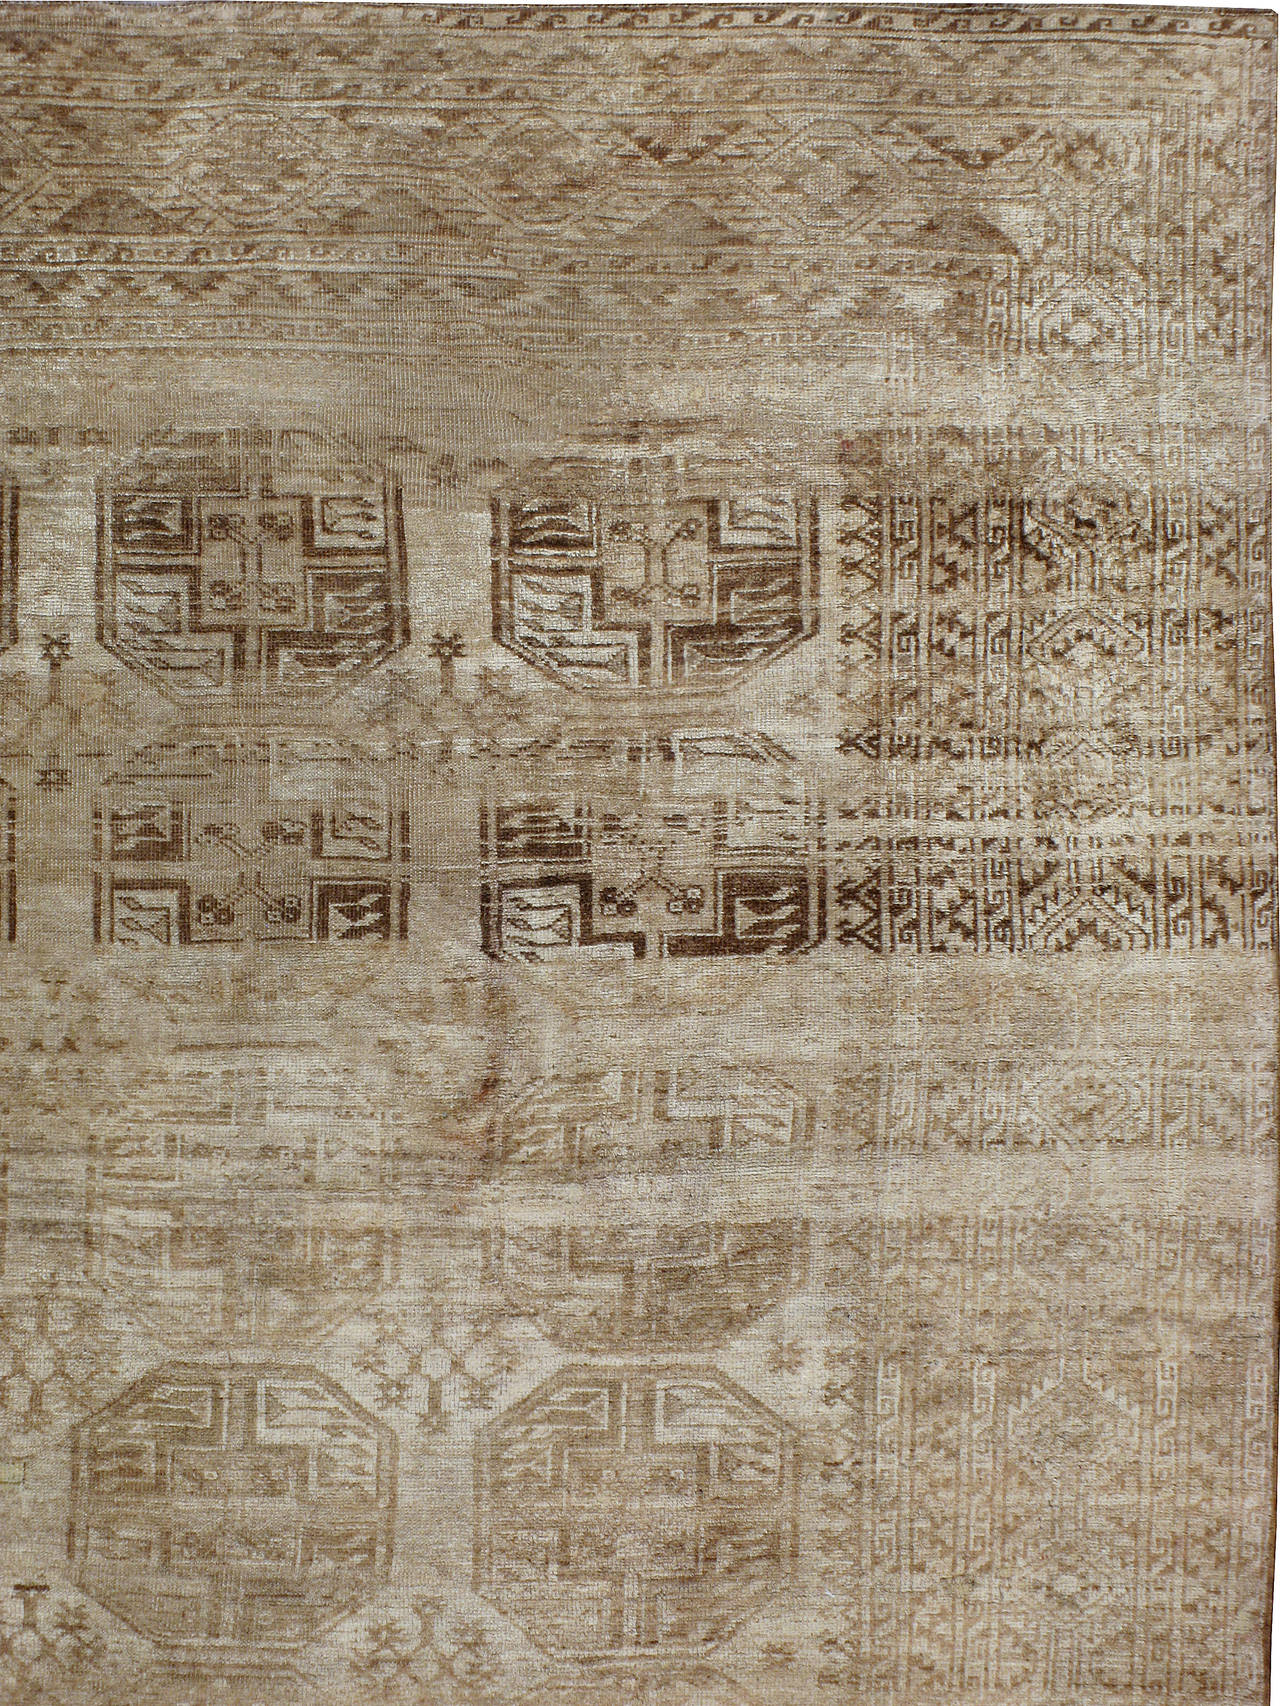 Hand-Woven Antique Central Asian Bokhara Rug